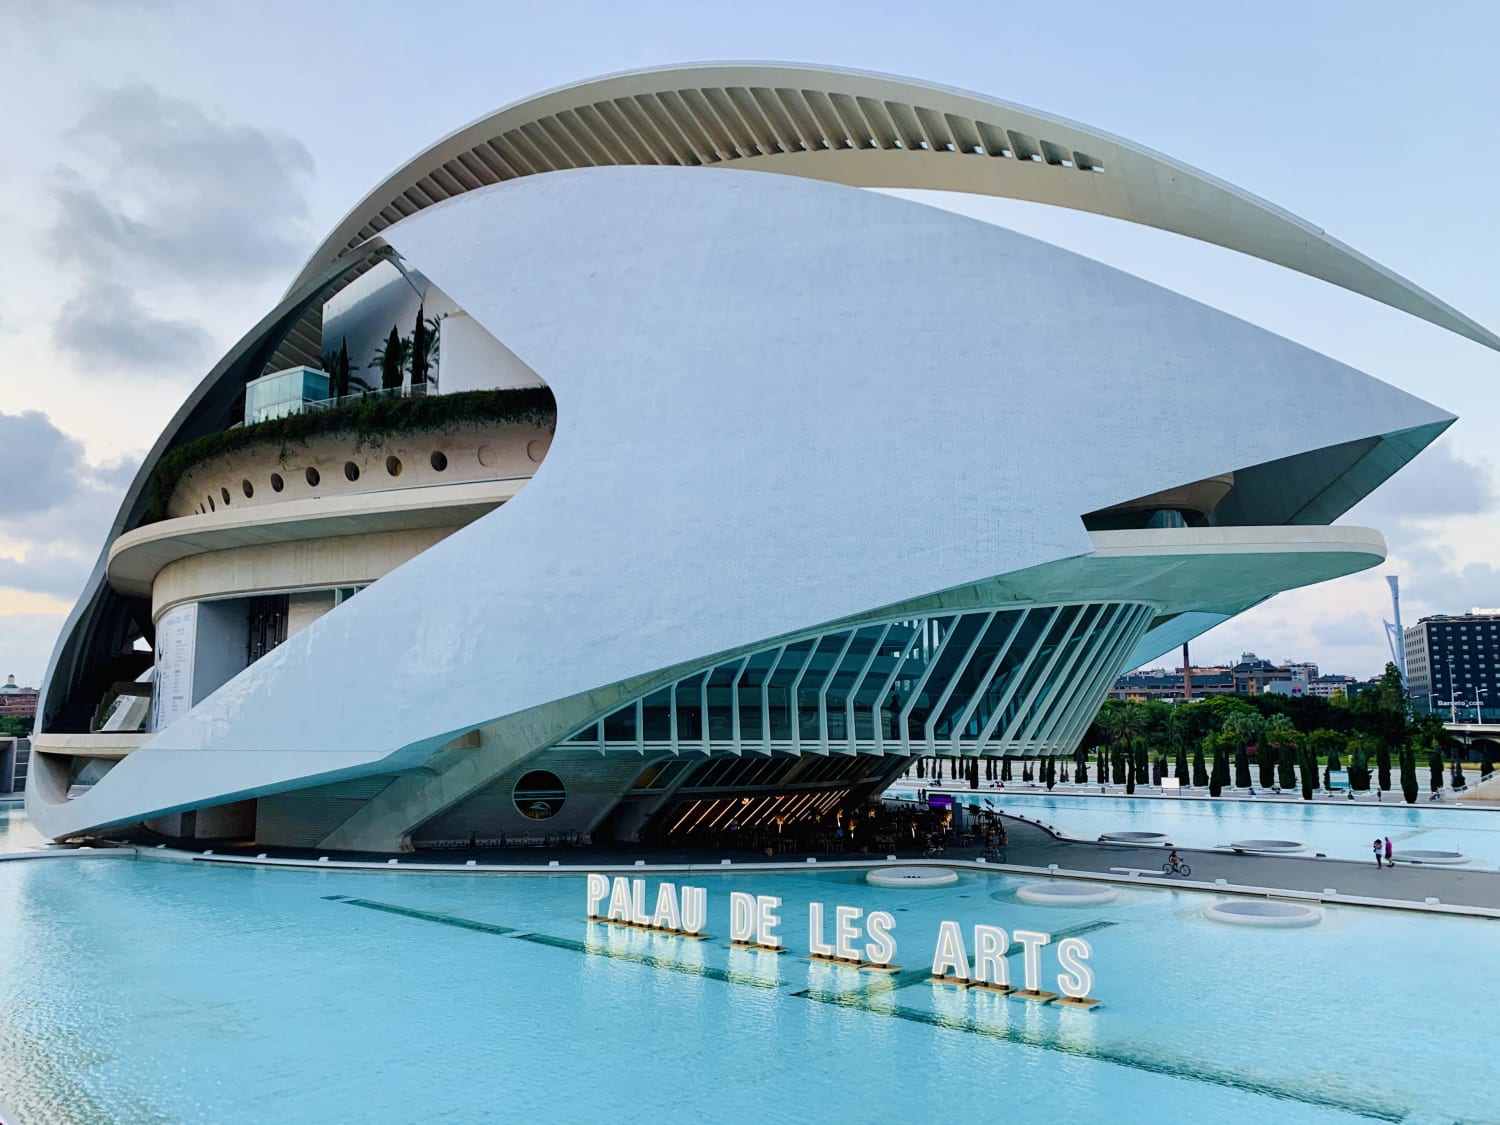 Palau de les Arts Reina Sofia designed by Santiago Calatrava; construction began in 1995 and the building opened in 2005.